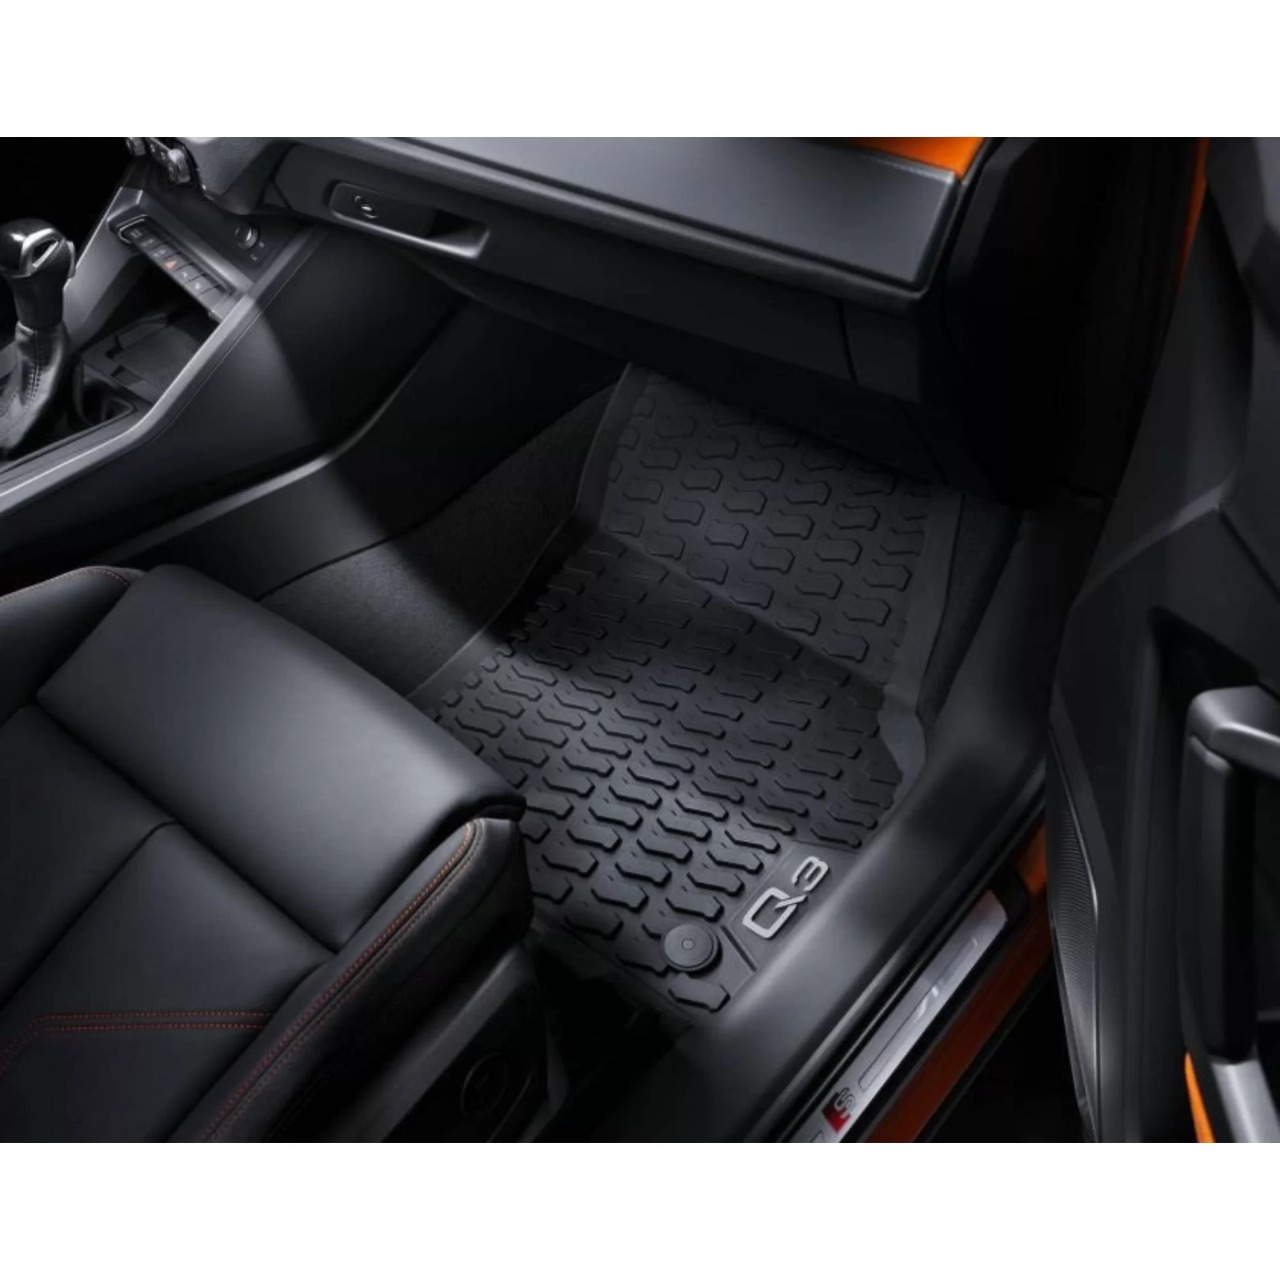 galeria Kit Essencial Audi Q3 (Jg de Tapetes, Jg de Pedaleira, Audi Beam e Cabide)